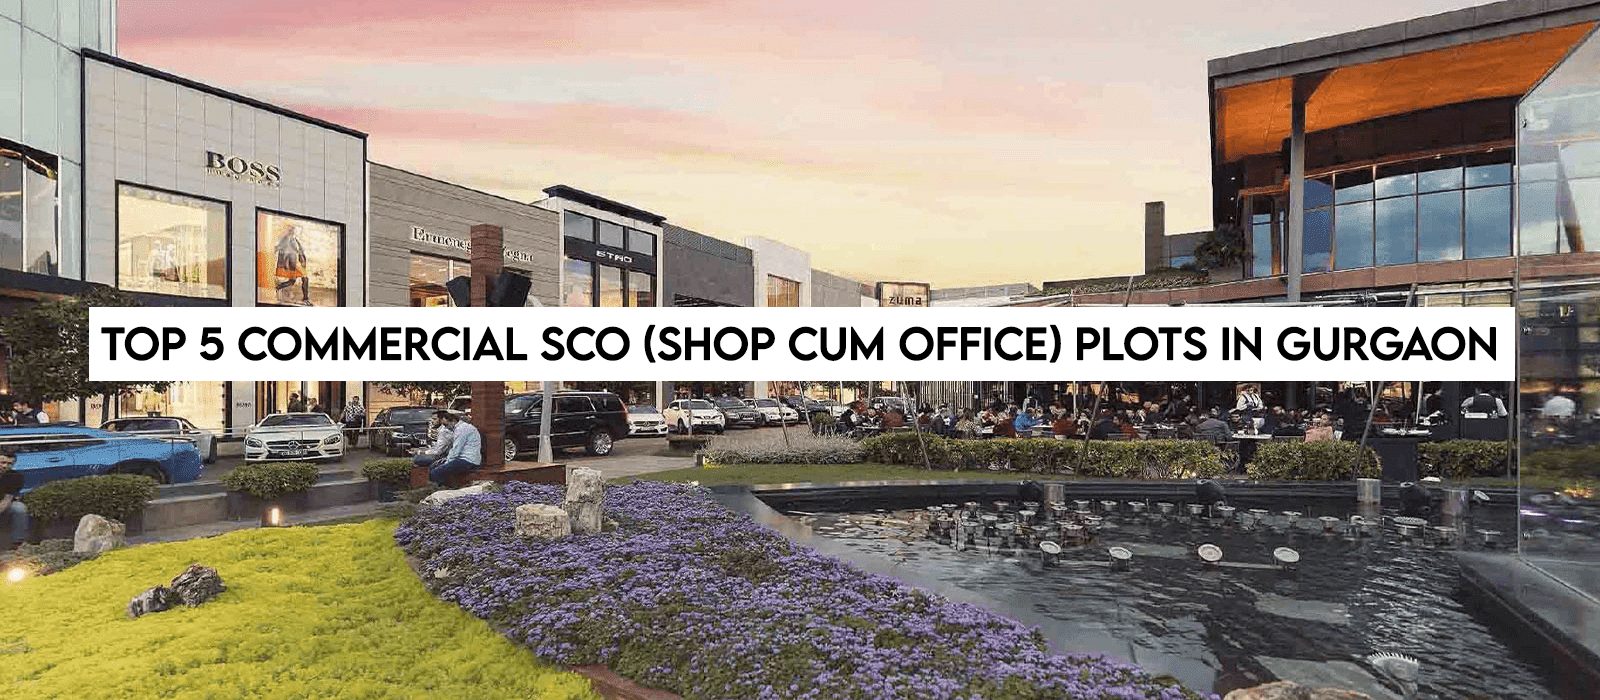 Top 5 Commercial SCO (Shop Cum Office) Plots in Gurgaon